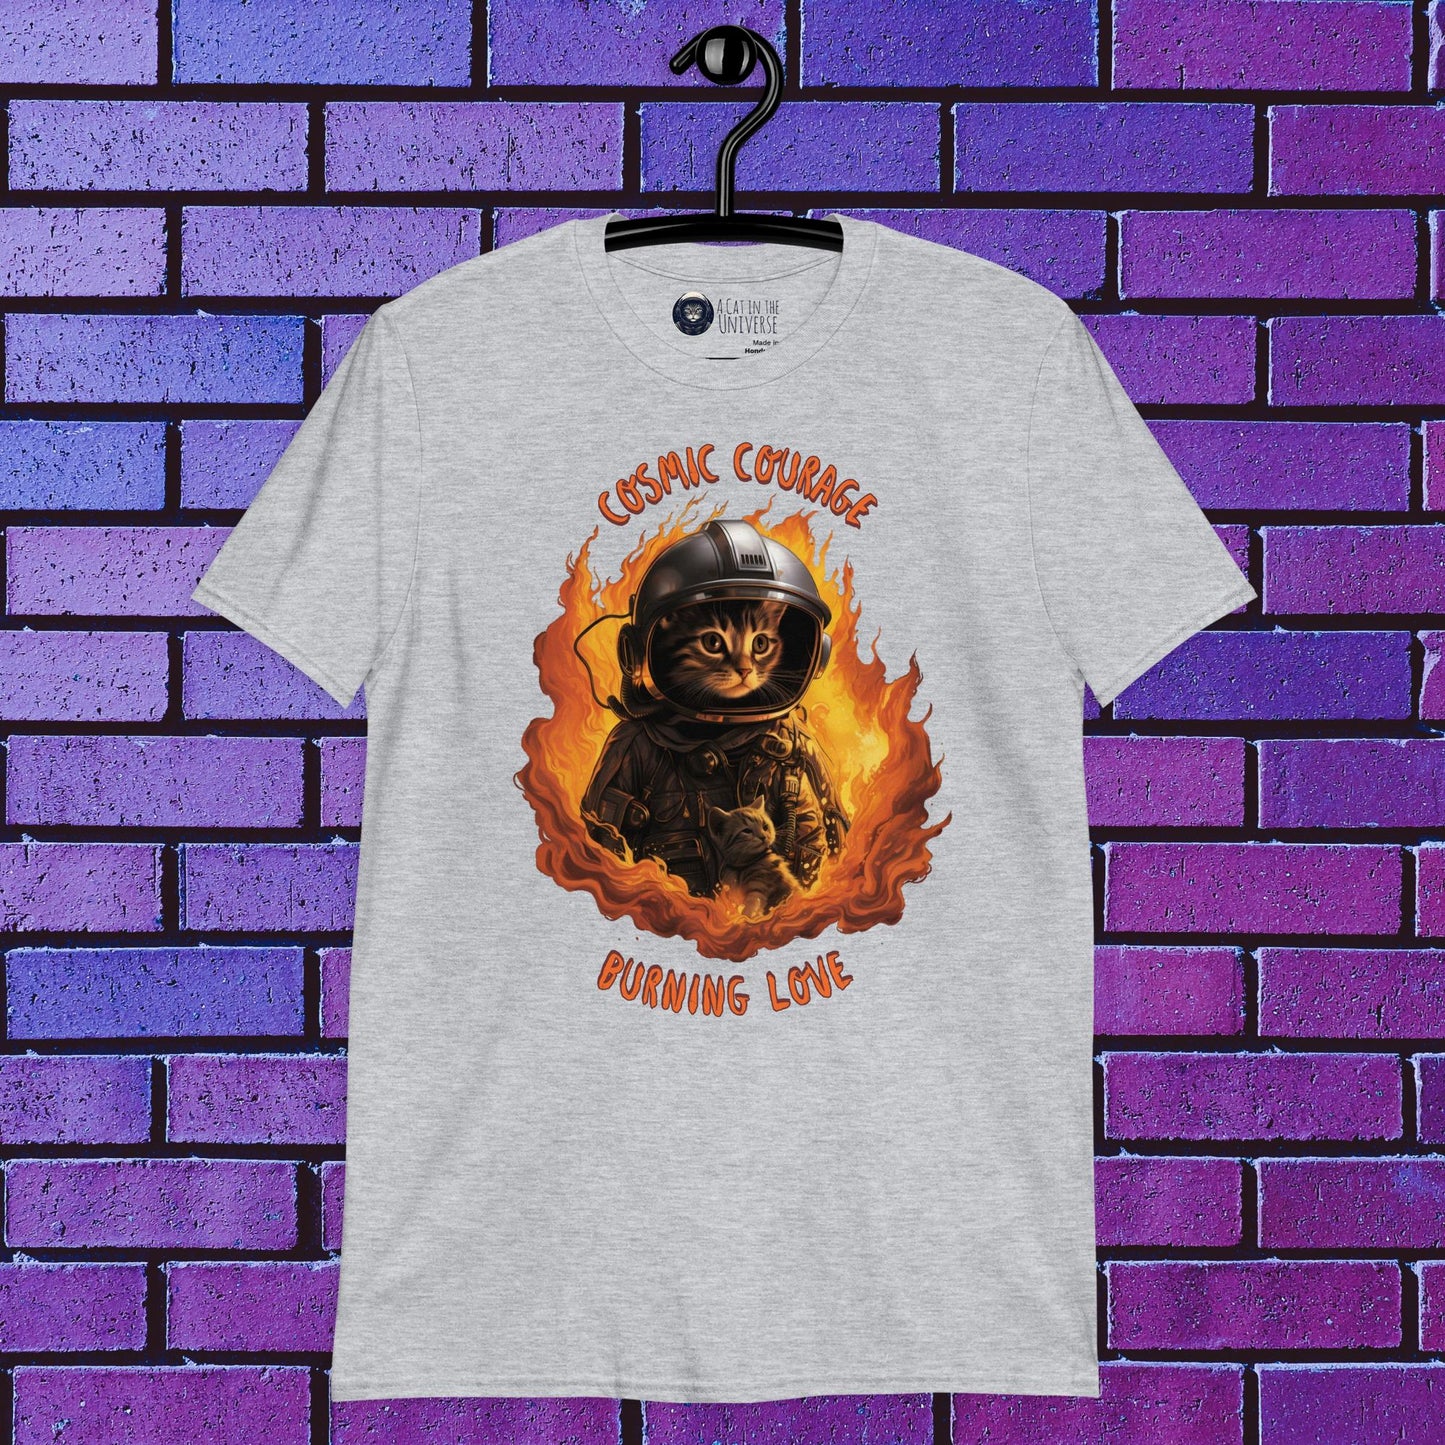 Camiseta "Cosmic Courage, Burning Love"